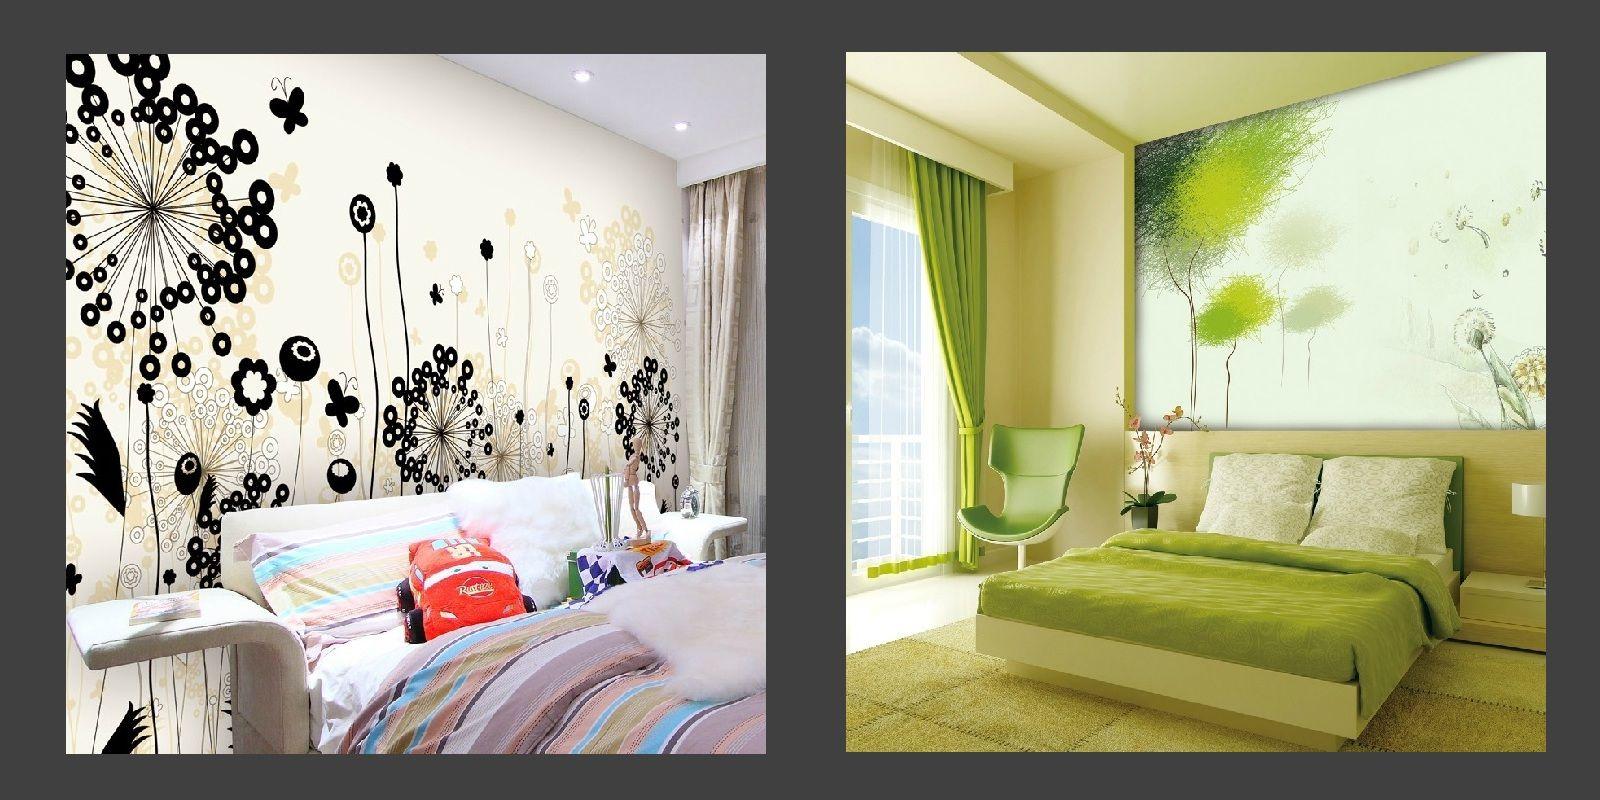 Wallpaper Design For Home Interiors home interior design wallpaper